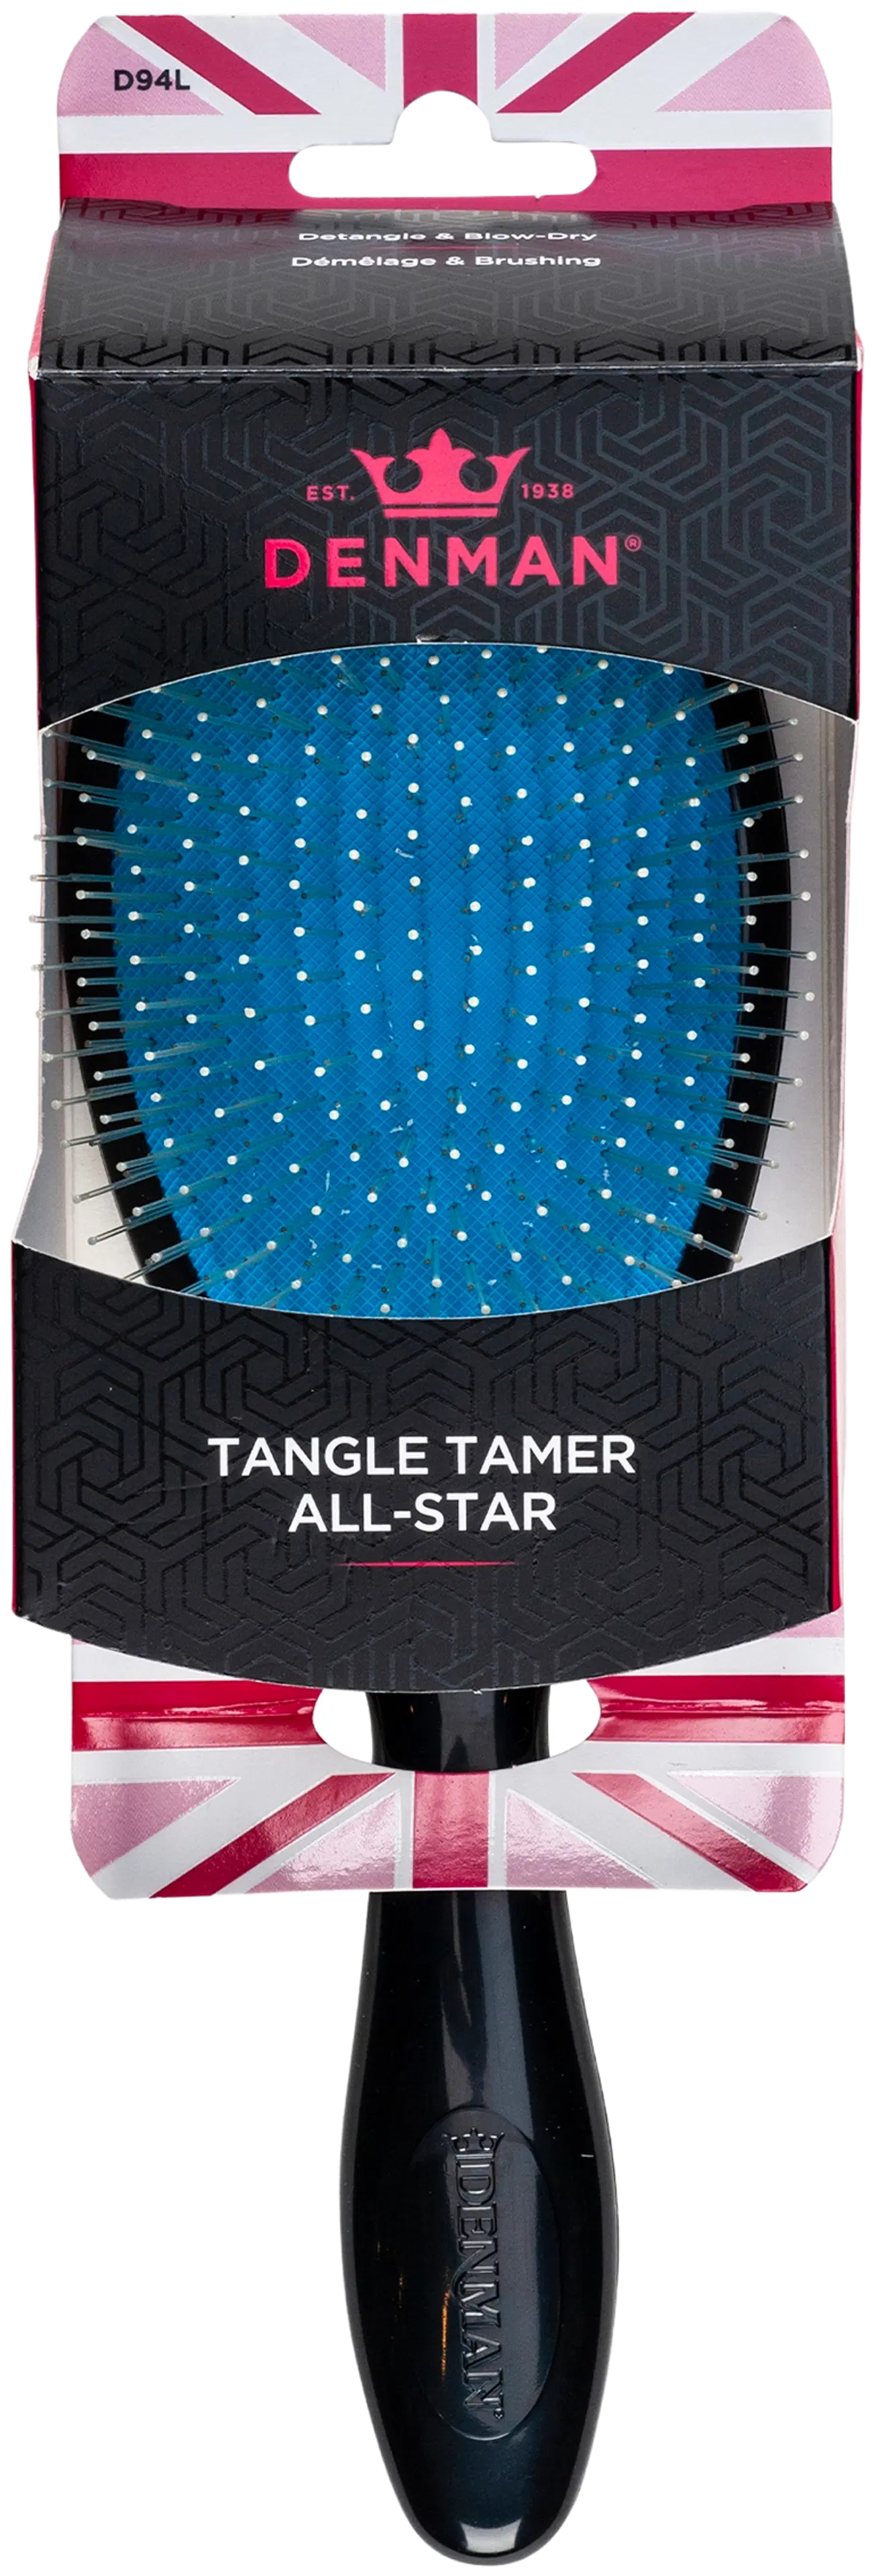 DENMAN D94L Tangle Tamer All Star takkuharja